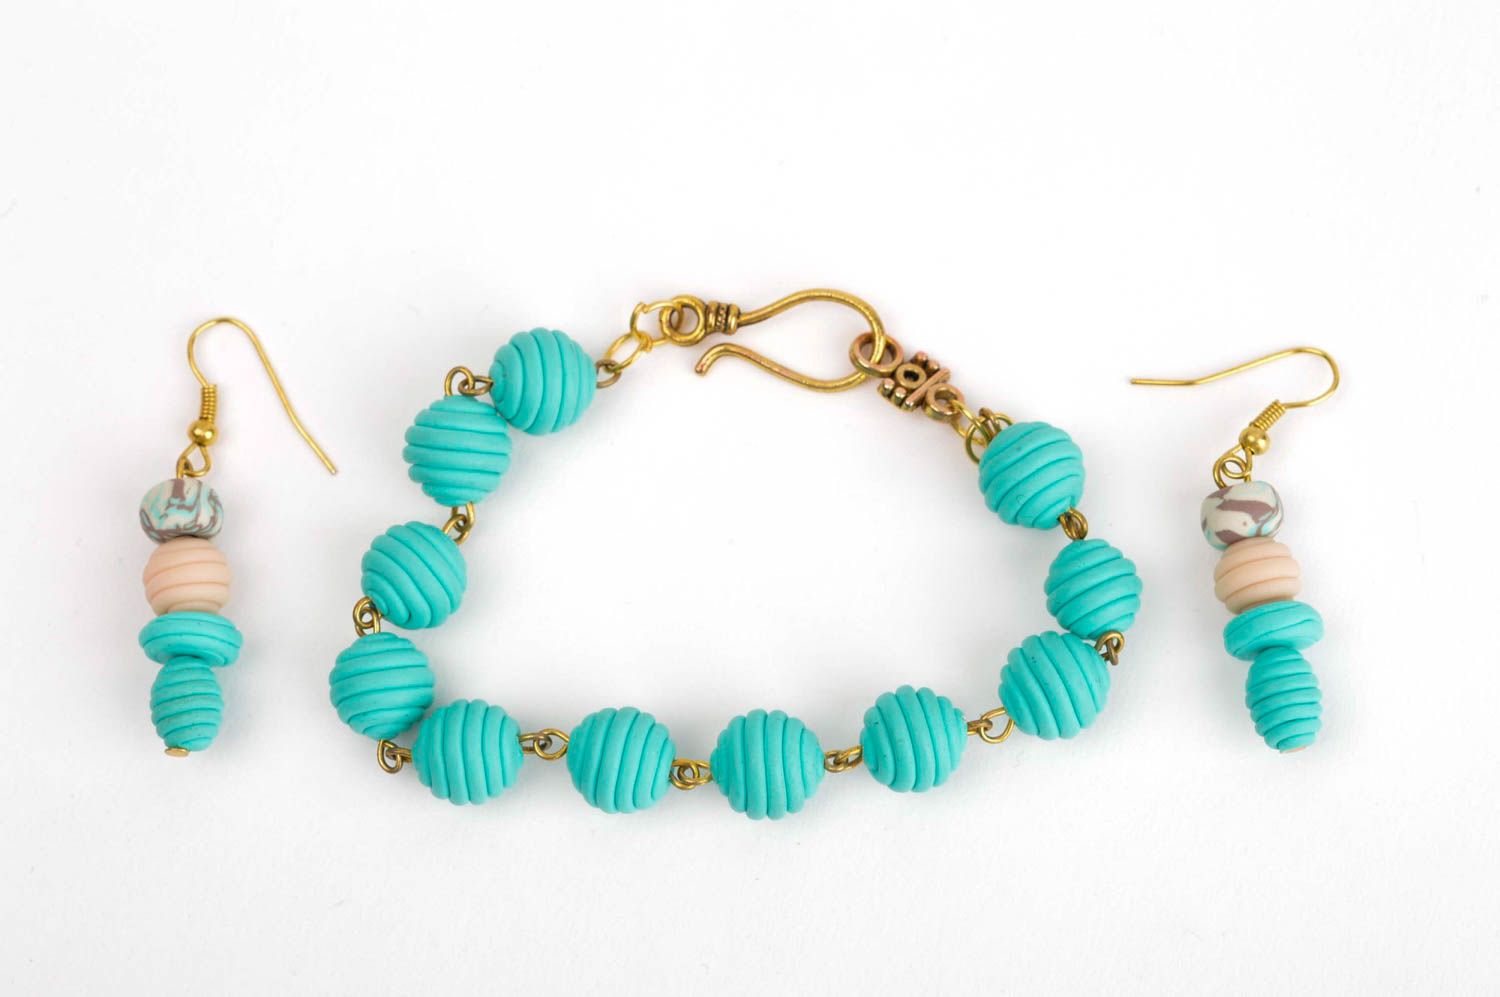 Handmade earrings designer bracelet clay jewelry set gift for her unusual gift photo 2